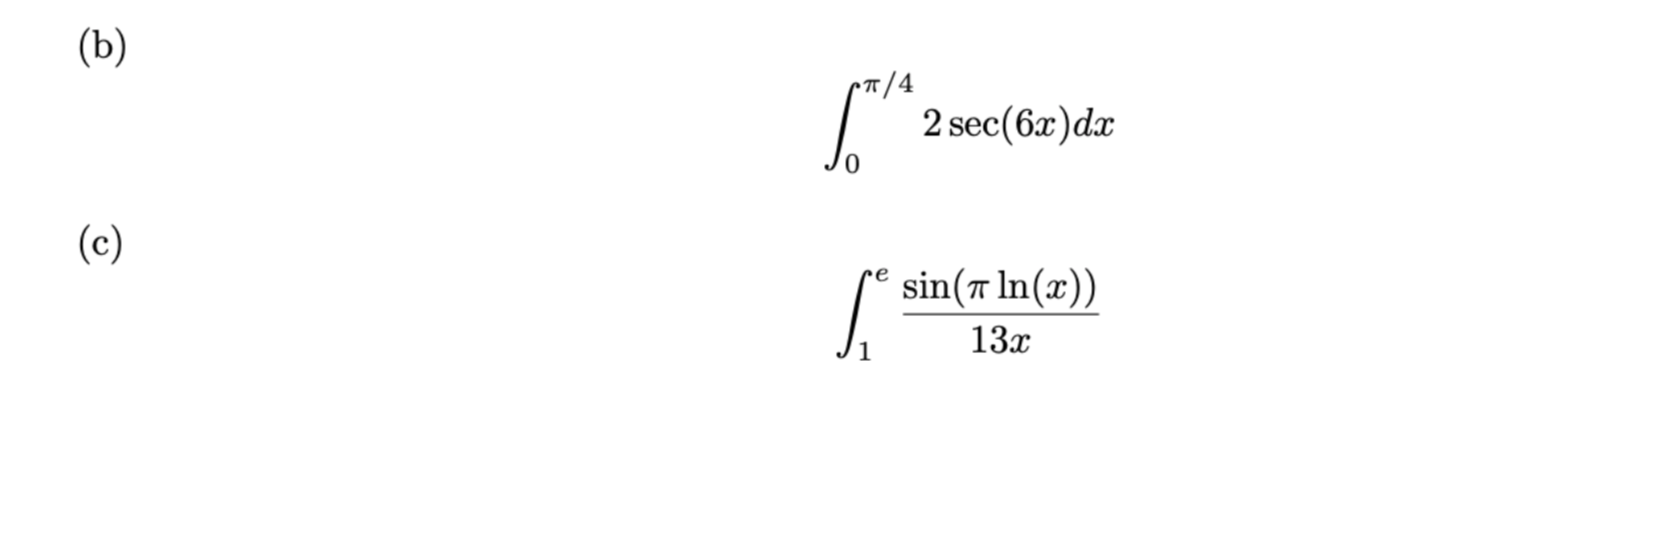 7/4
2 sec(6x)dx
sin(r In(x))
13x
1
